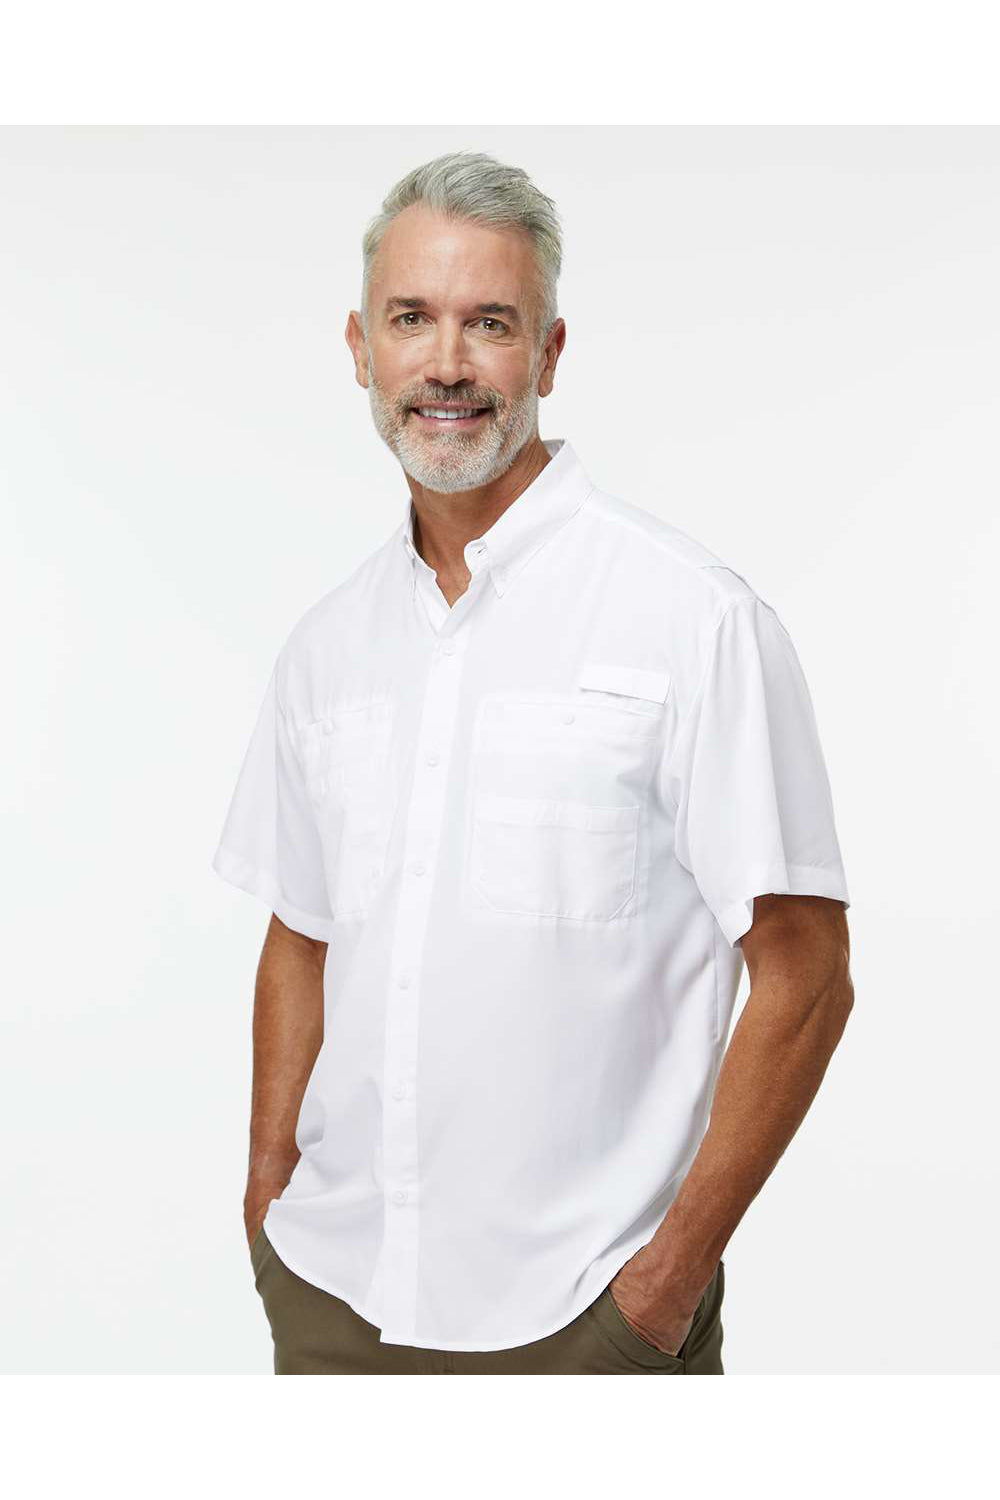 Paragon 700 Mens Hatteras Performance Short Sleeve Button Down Shirt White Model Side